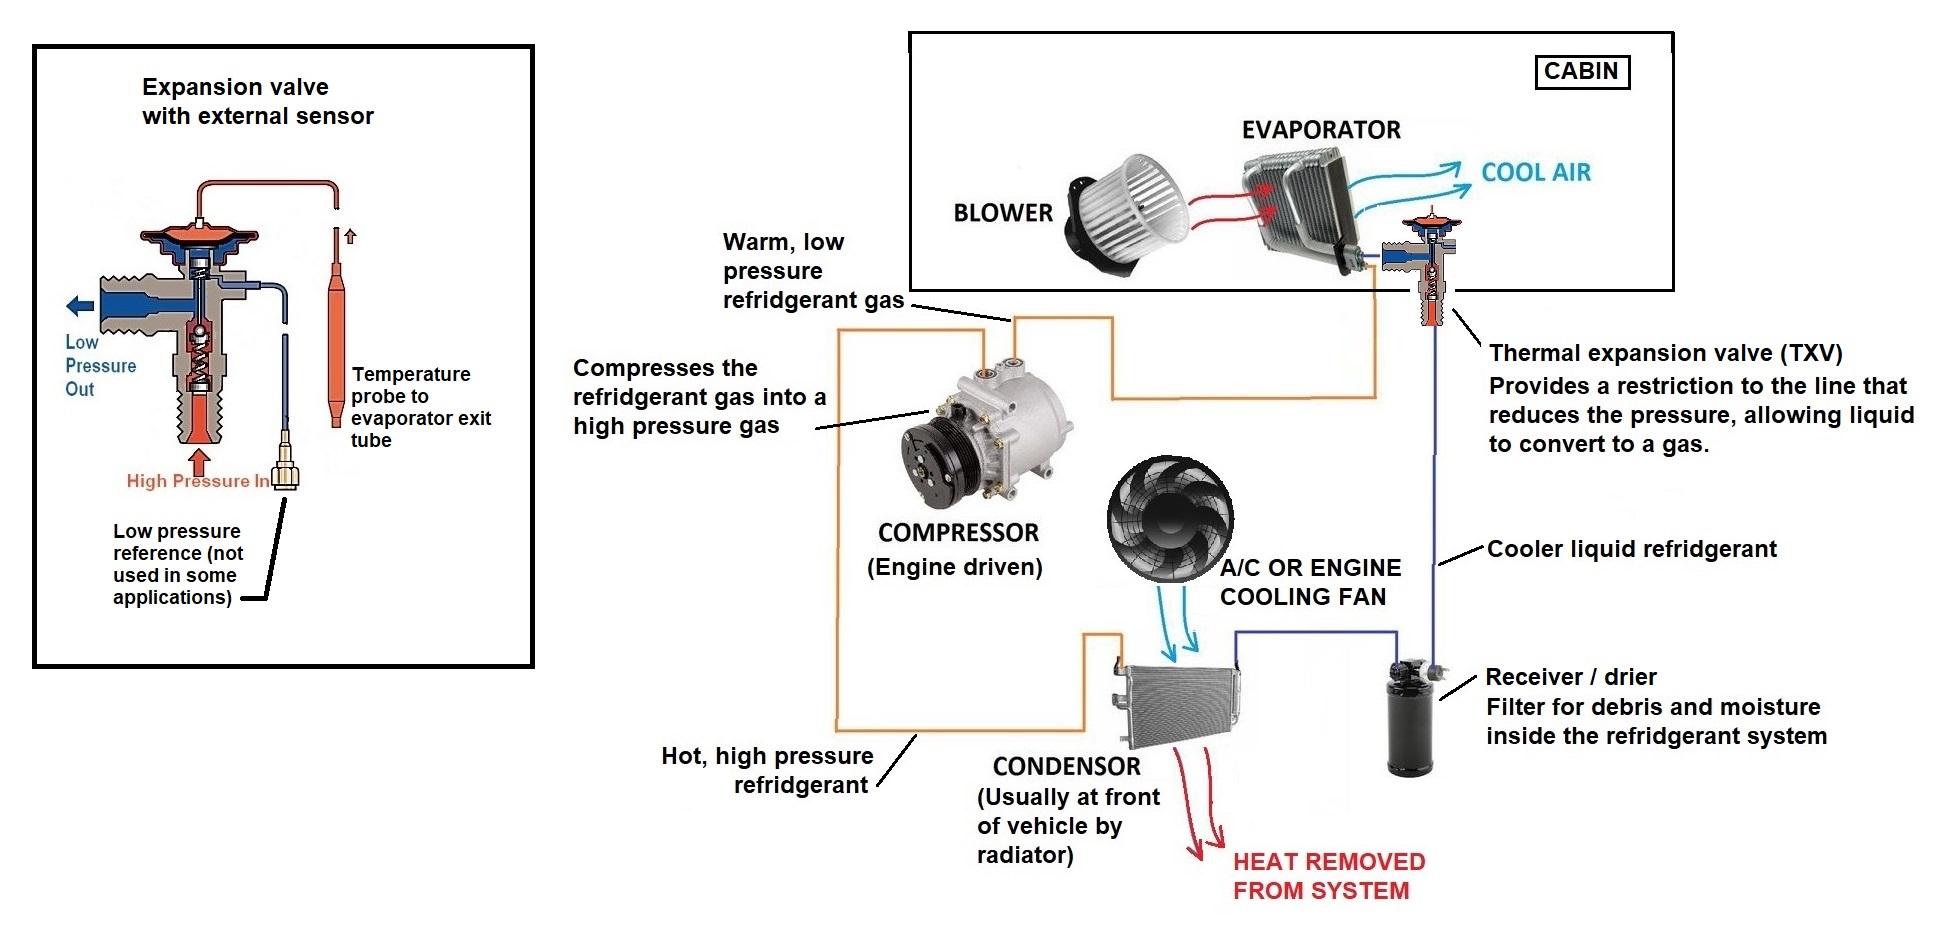 External sensor metering valve